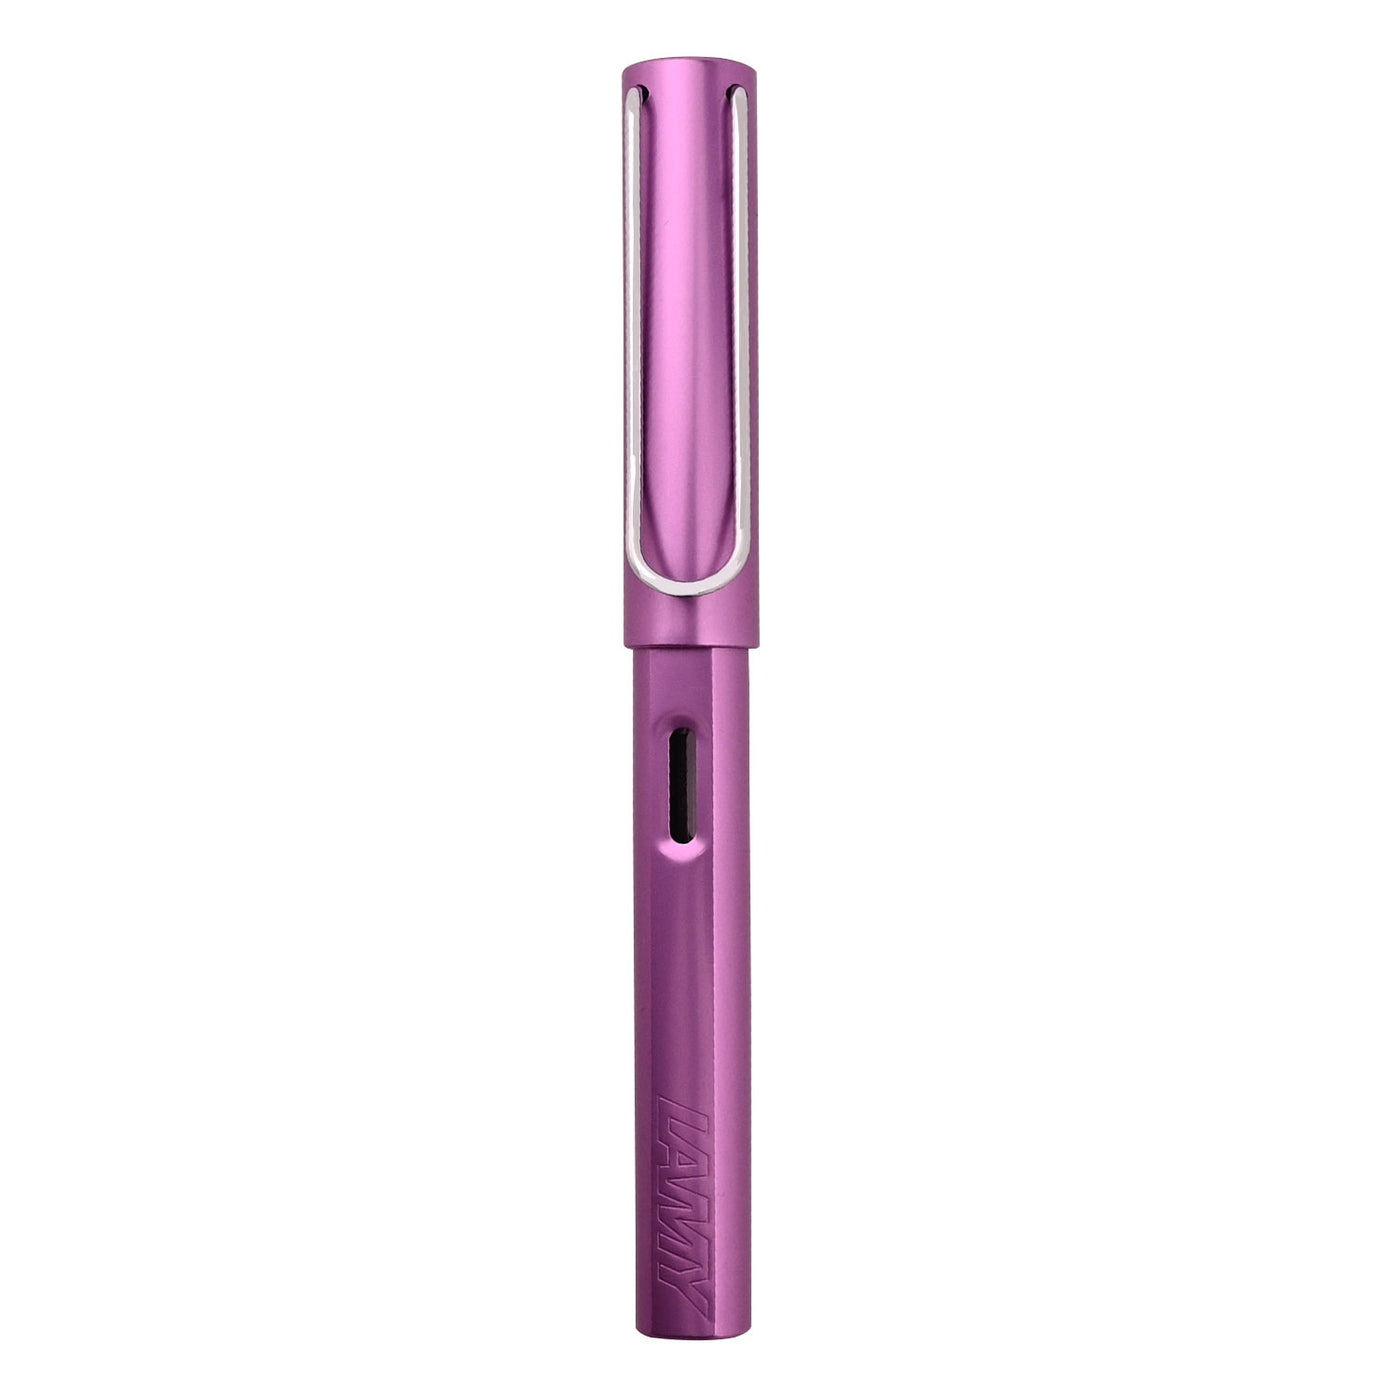 Lamy AL-star Fountain Pen - Lilac (Special Edition) 8